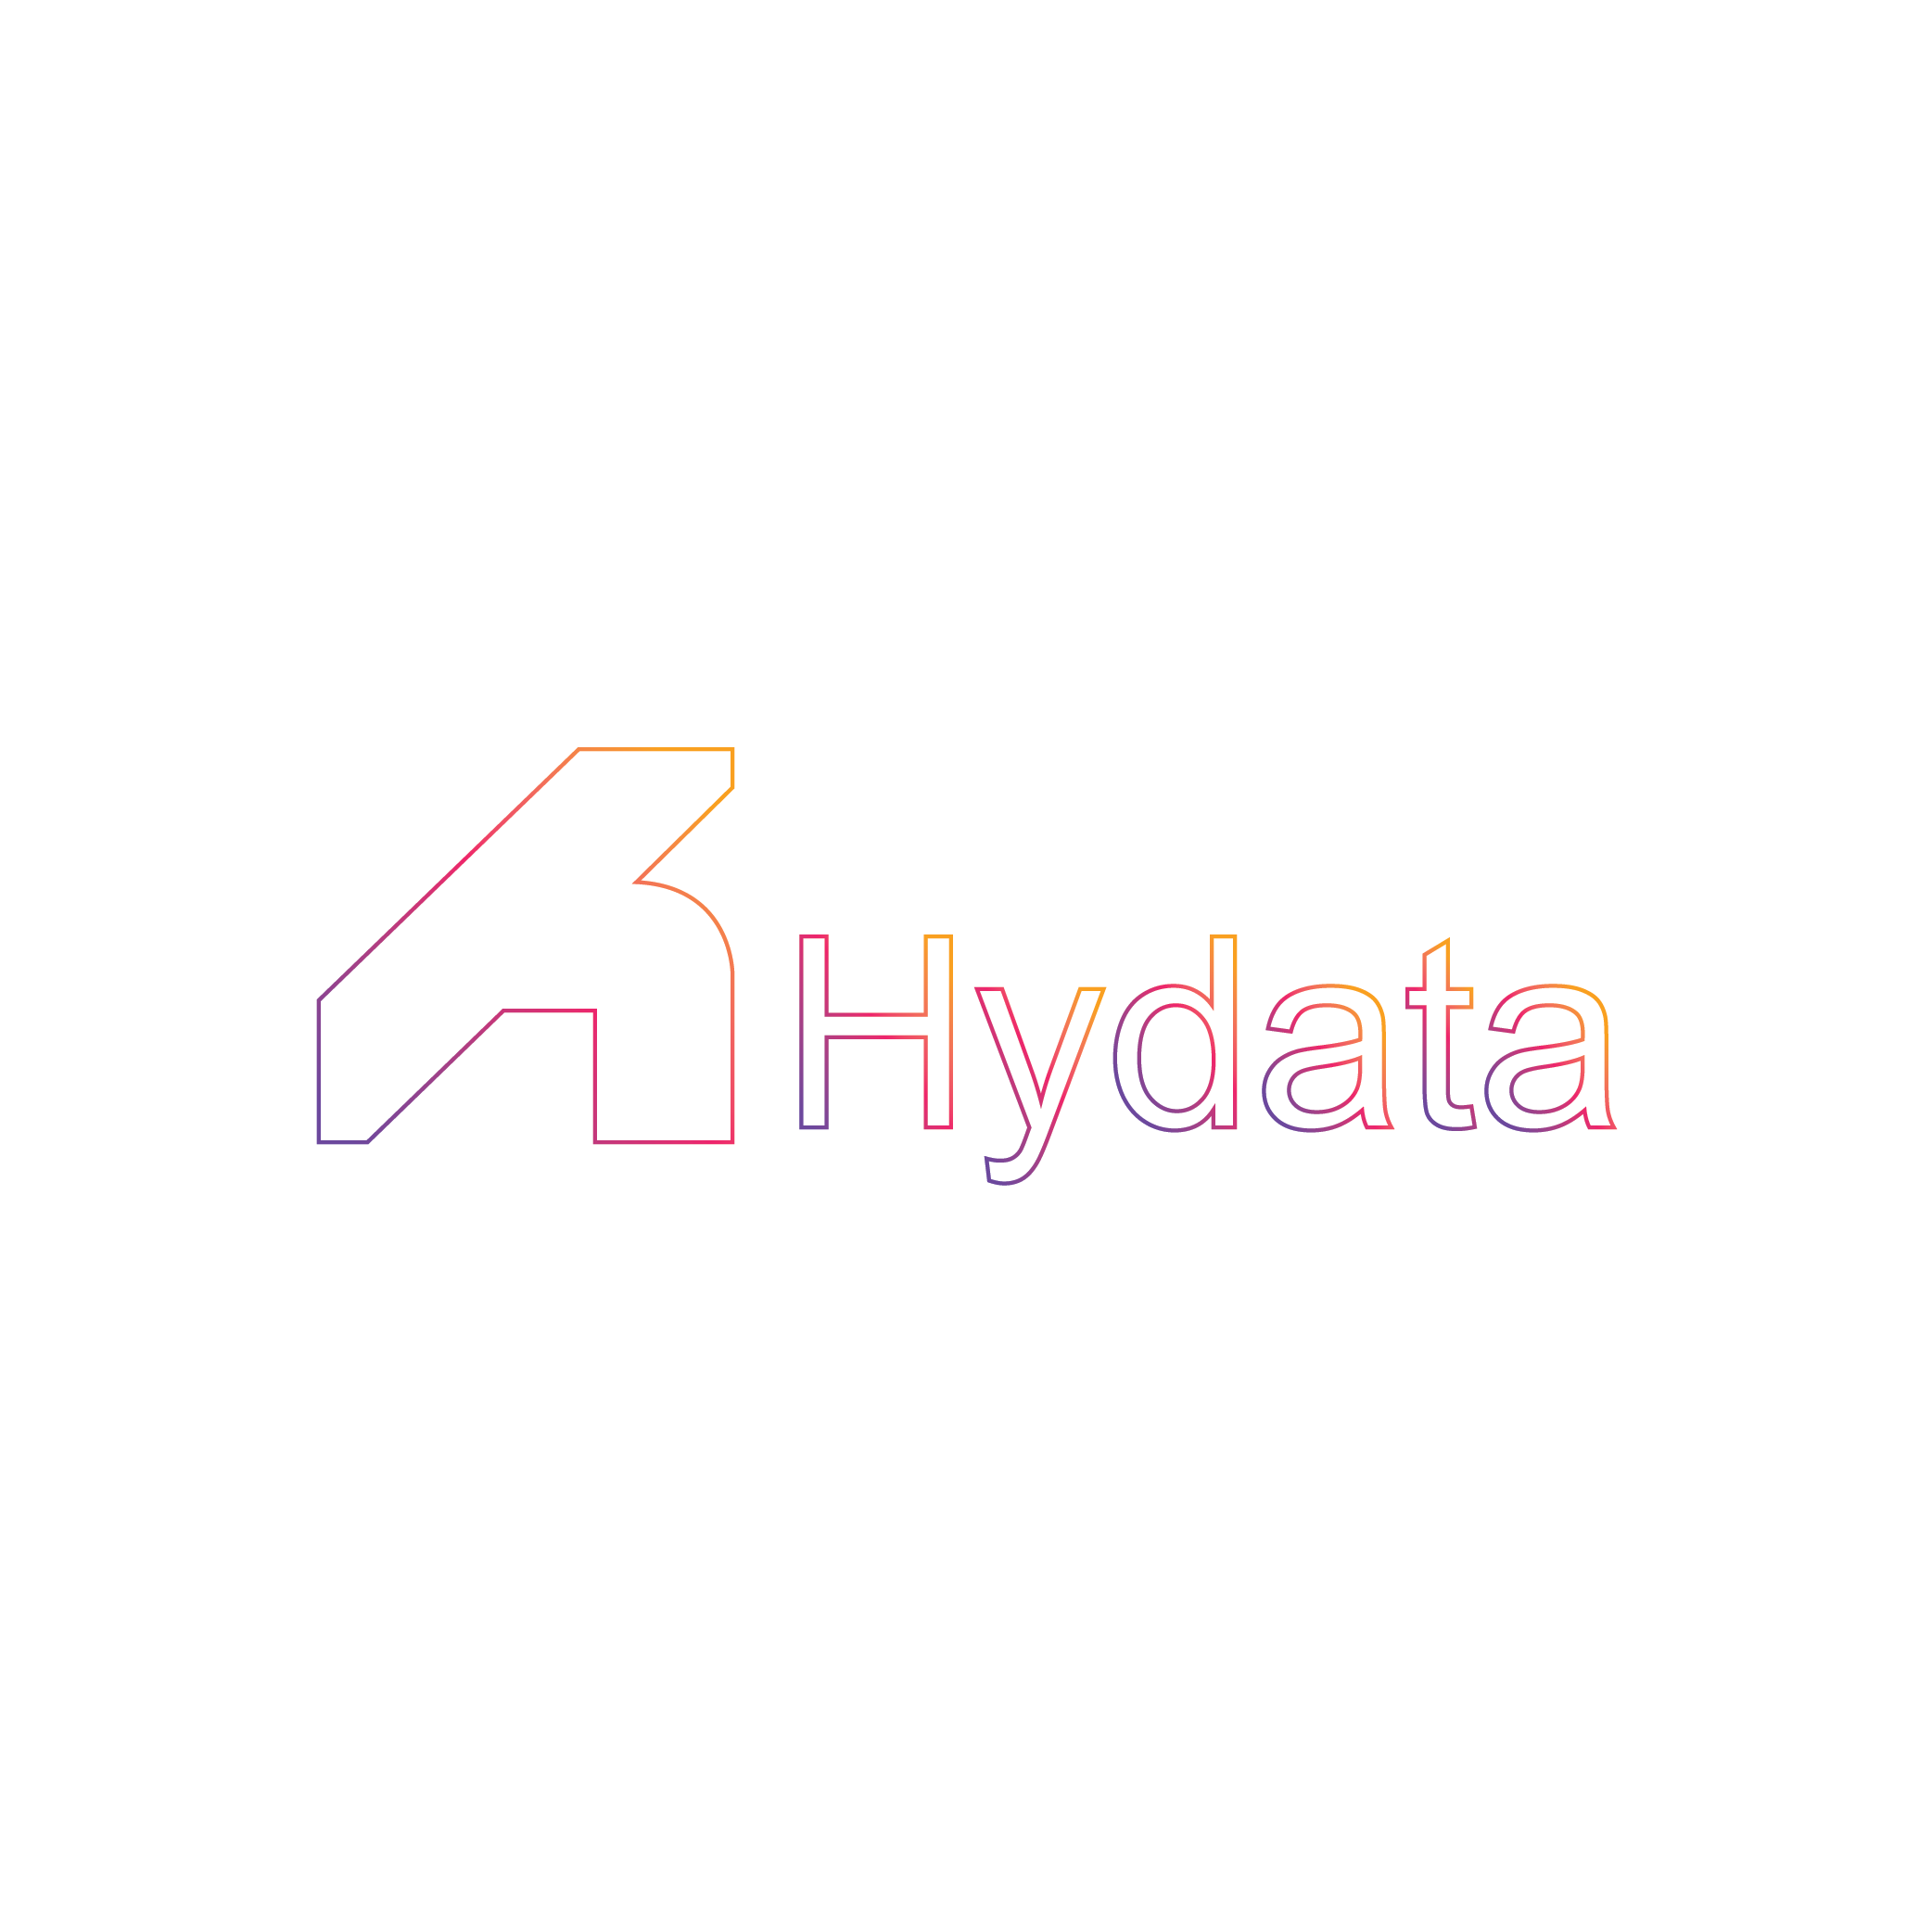 Hydata Brand Identity Logo Template pinterest preview image.